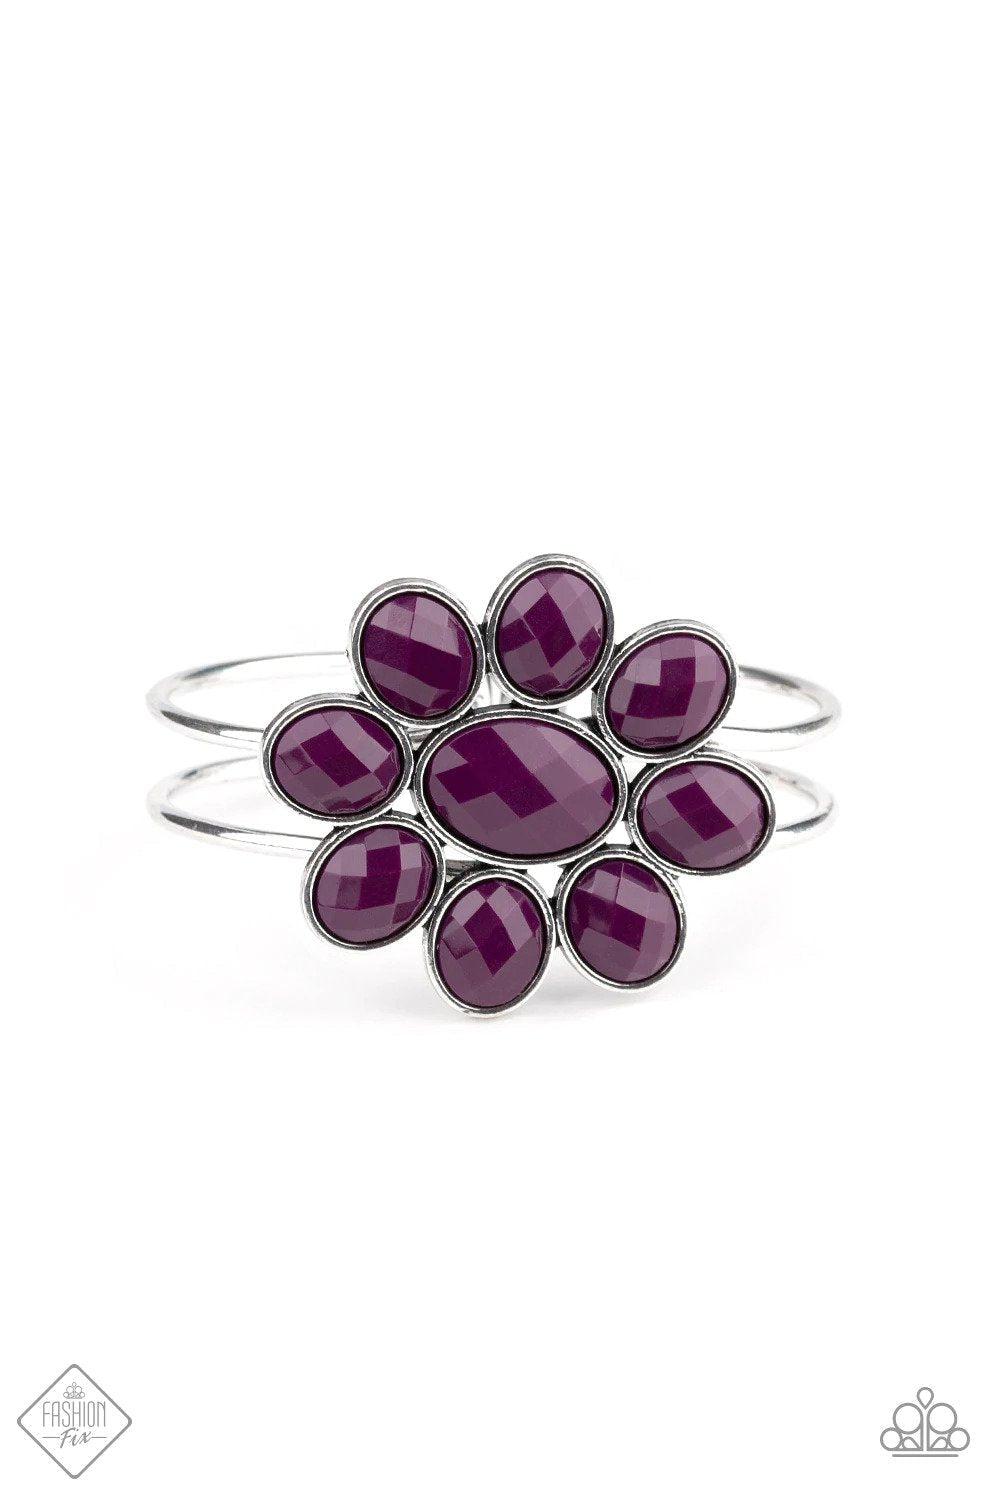 Petal Persuasion Purple Flower Bracelet - Paparazzi Accessories- lightbox - CarasShop.com - $5 Jewelry by Cara Jewels